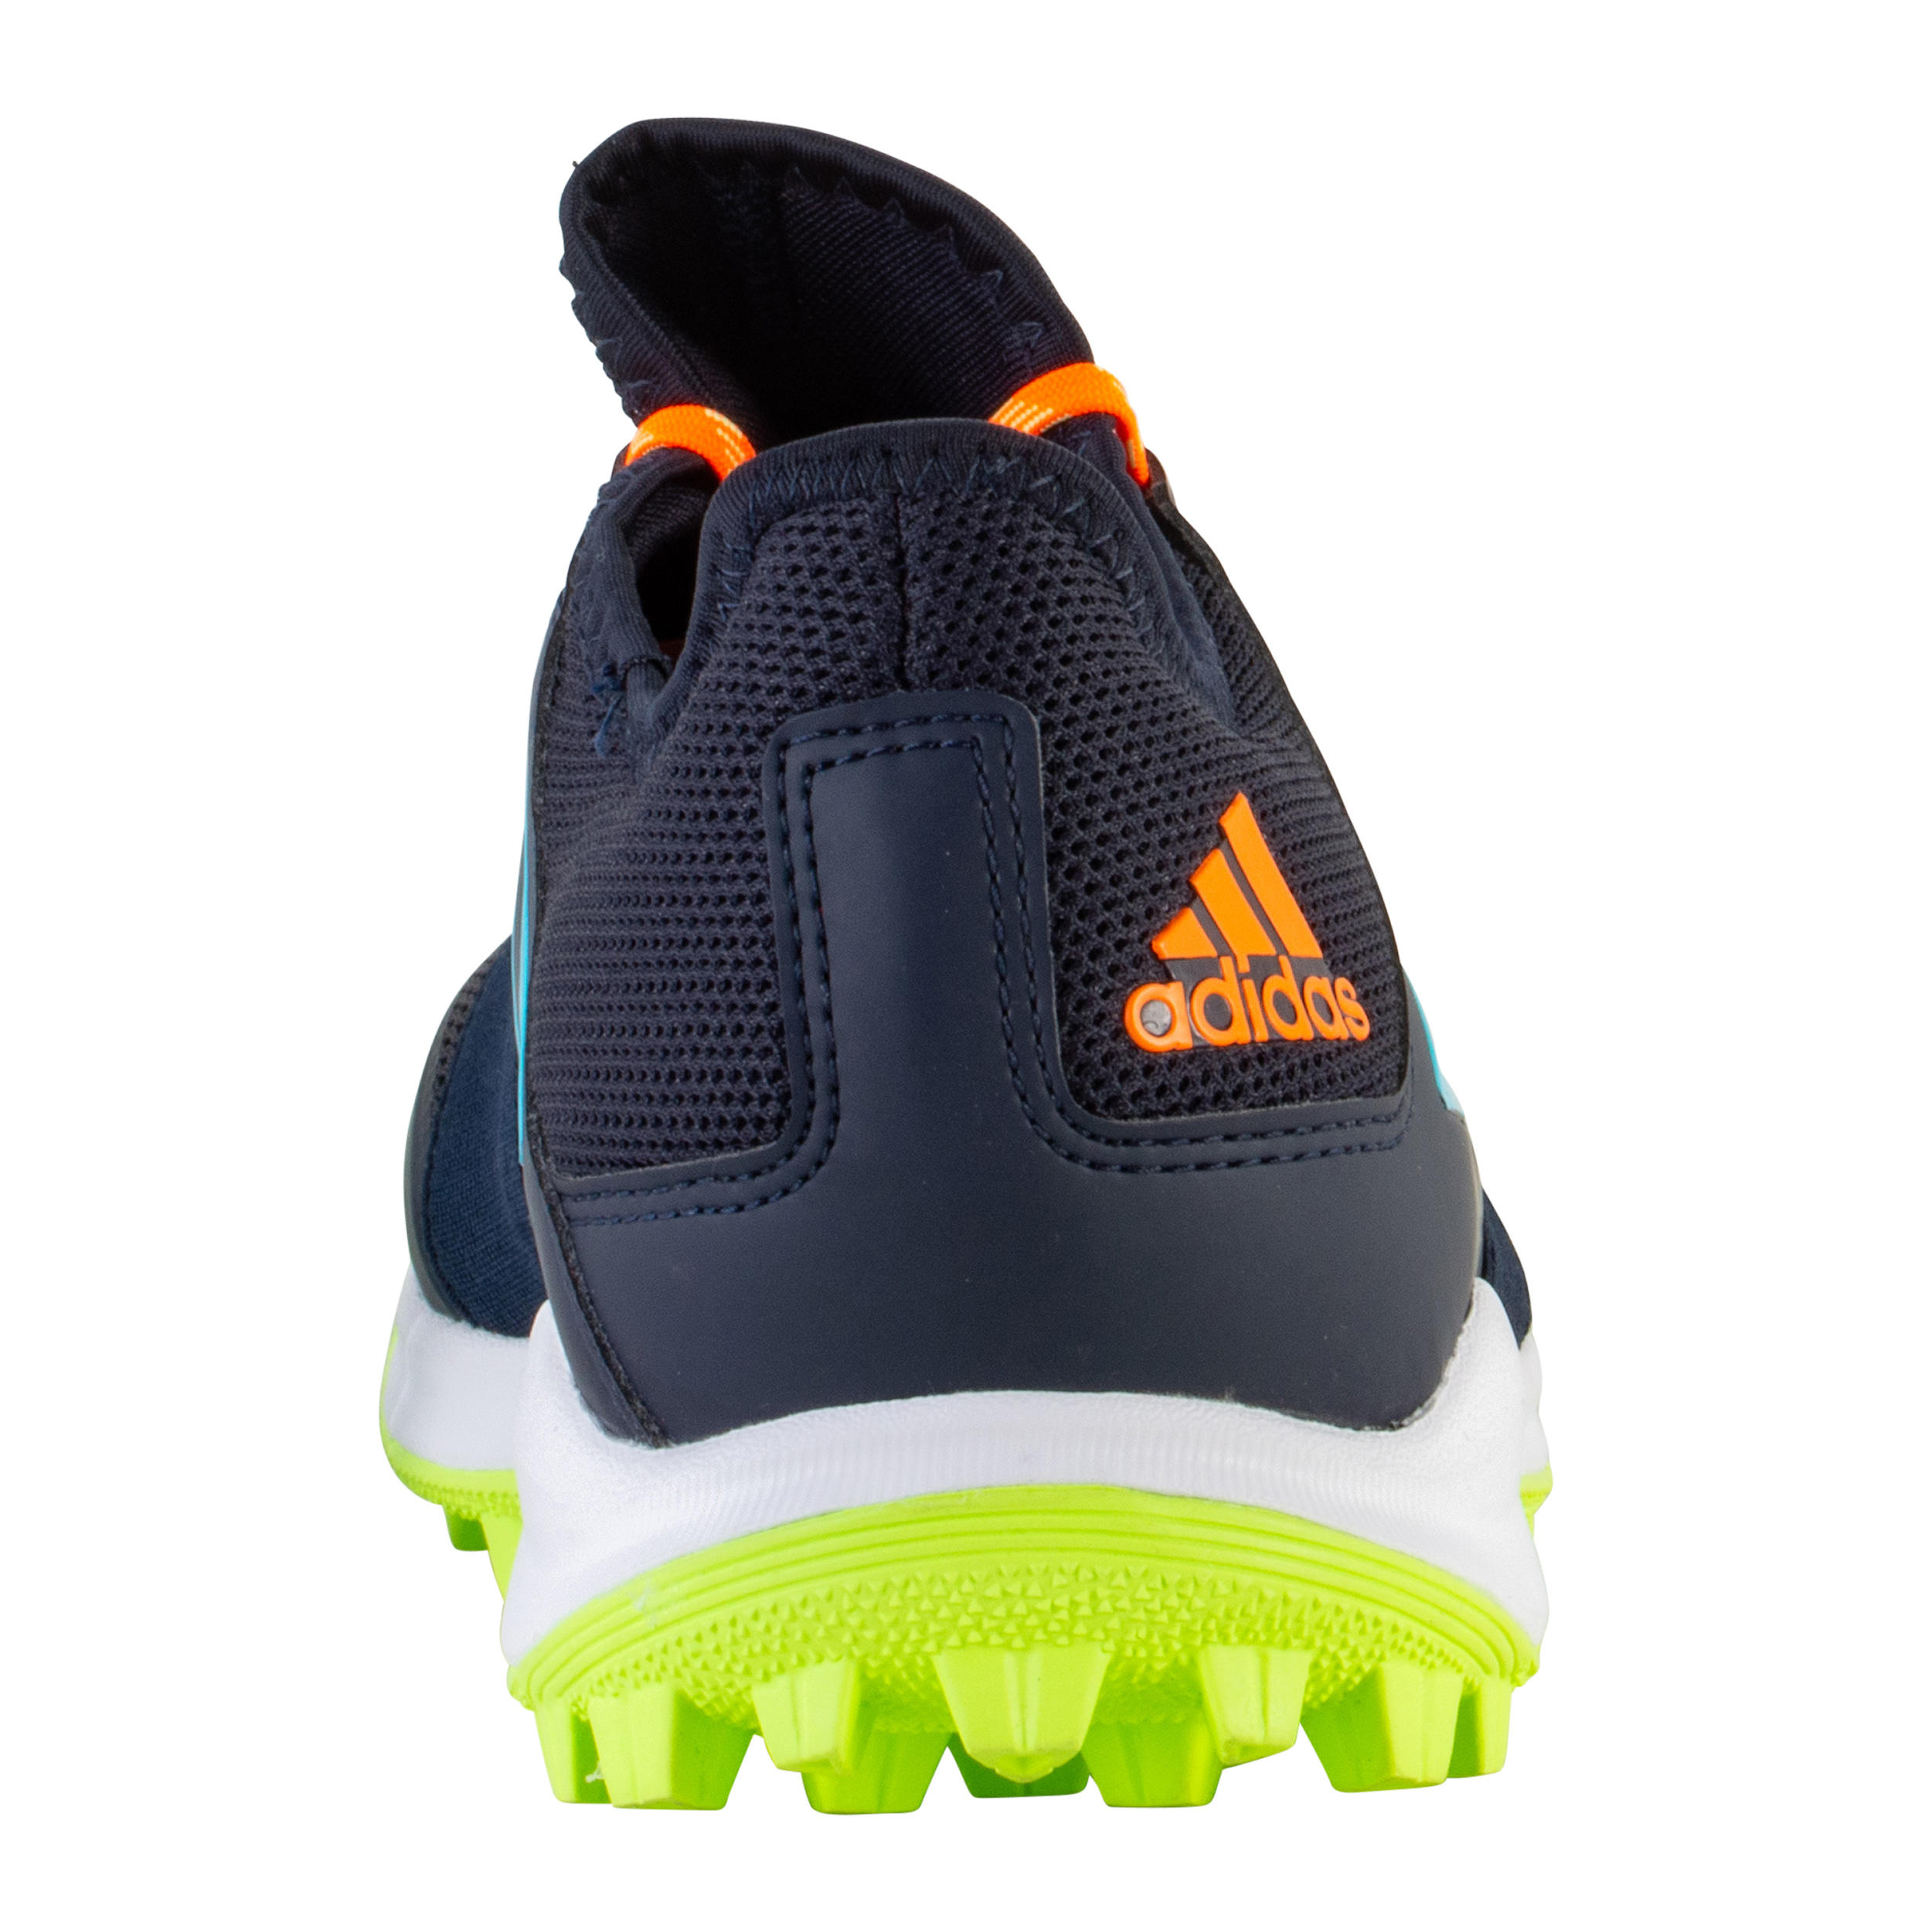 Adult Moderate-Intensity Field Hockey Shoes Divox 1.9S - Navy/Orange 2/7